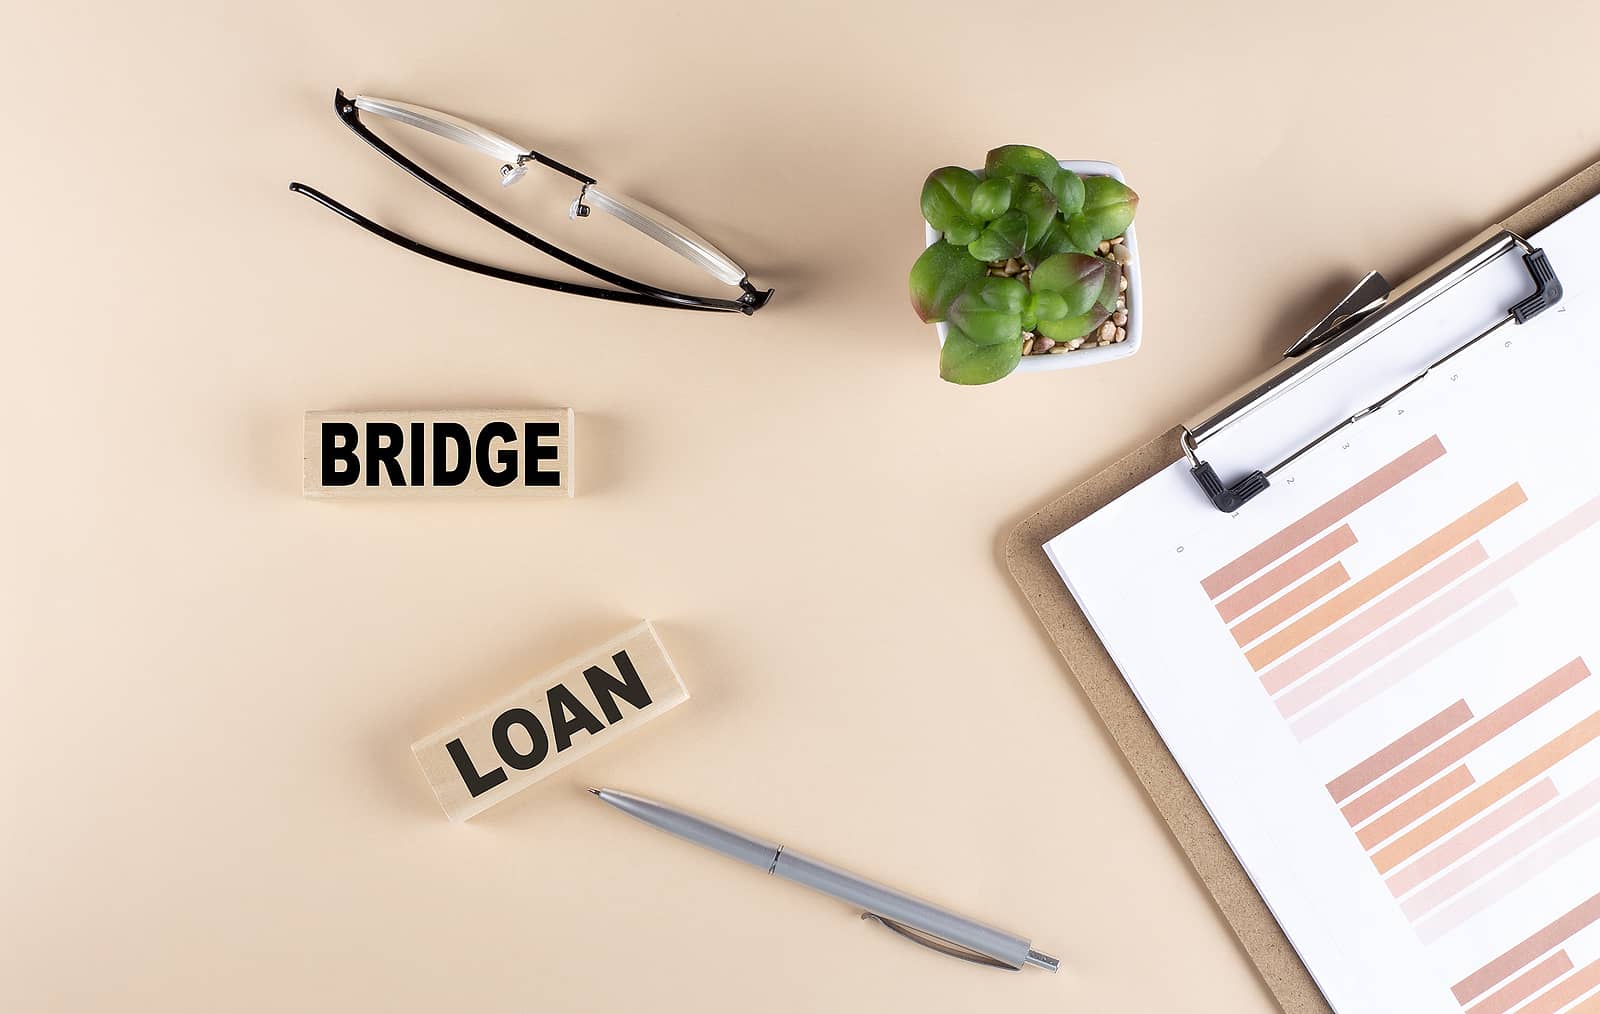 Bridge Loans and Financing in Ontario